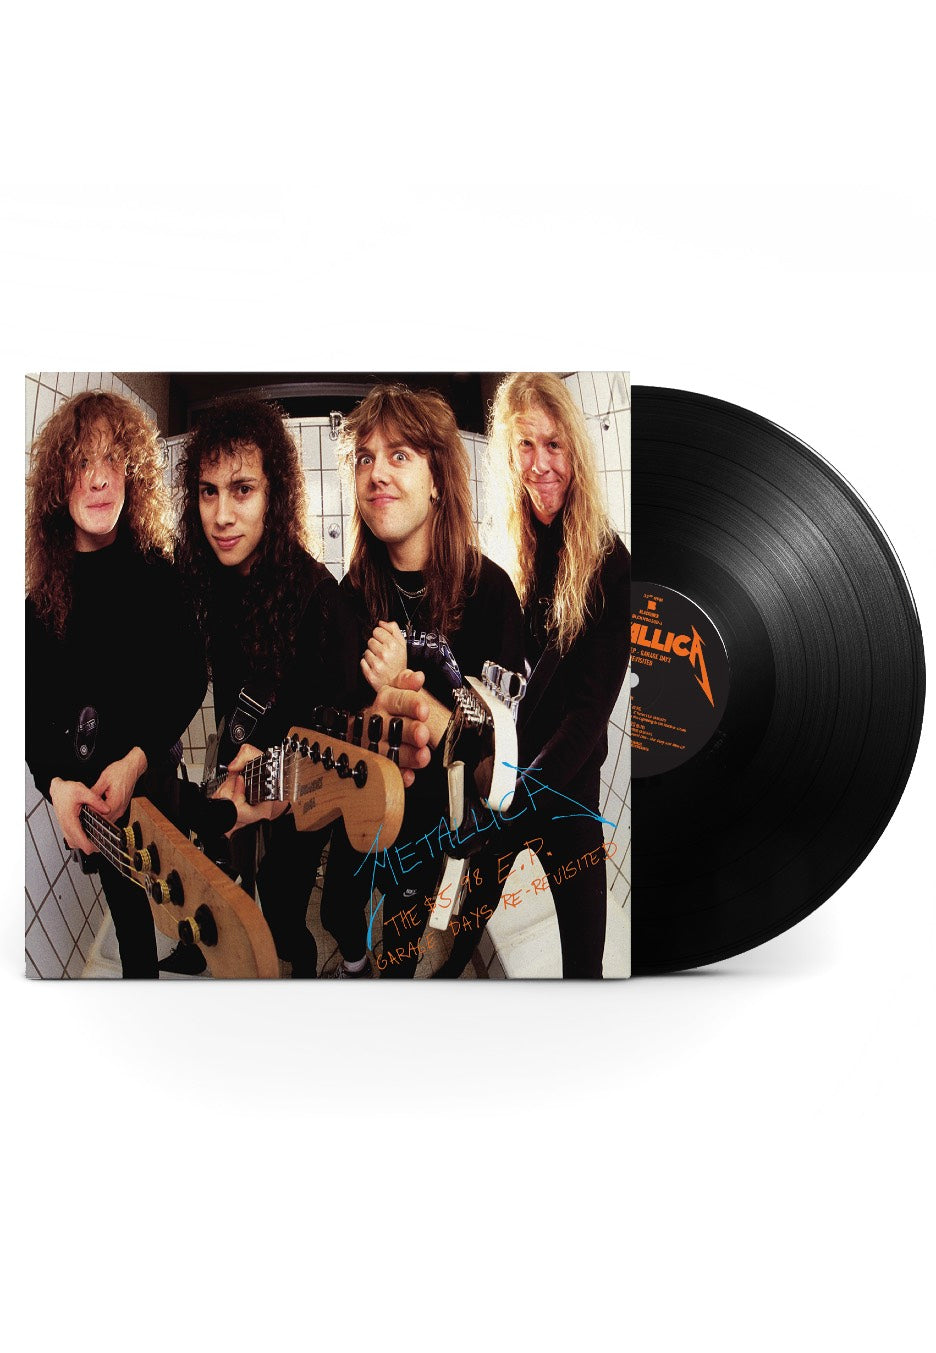 Metallica - The $5.98 E.P. - Garage Days Re-Revisited - Vinyl